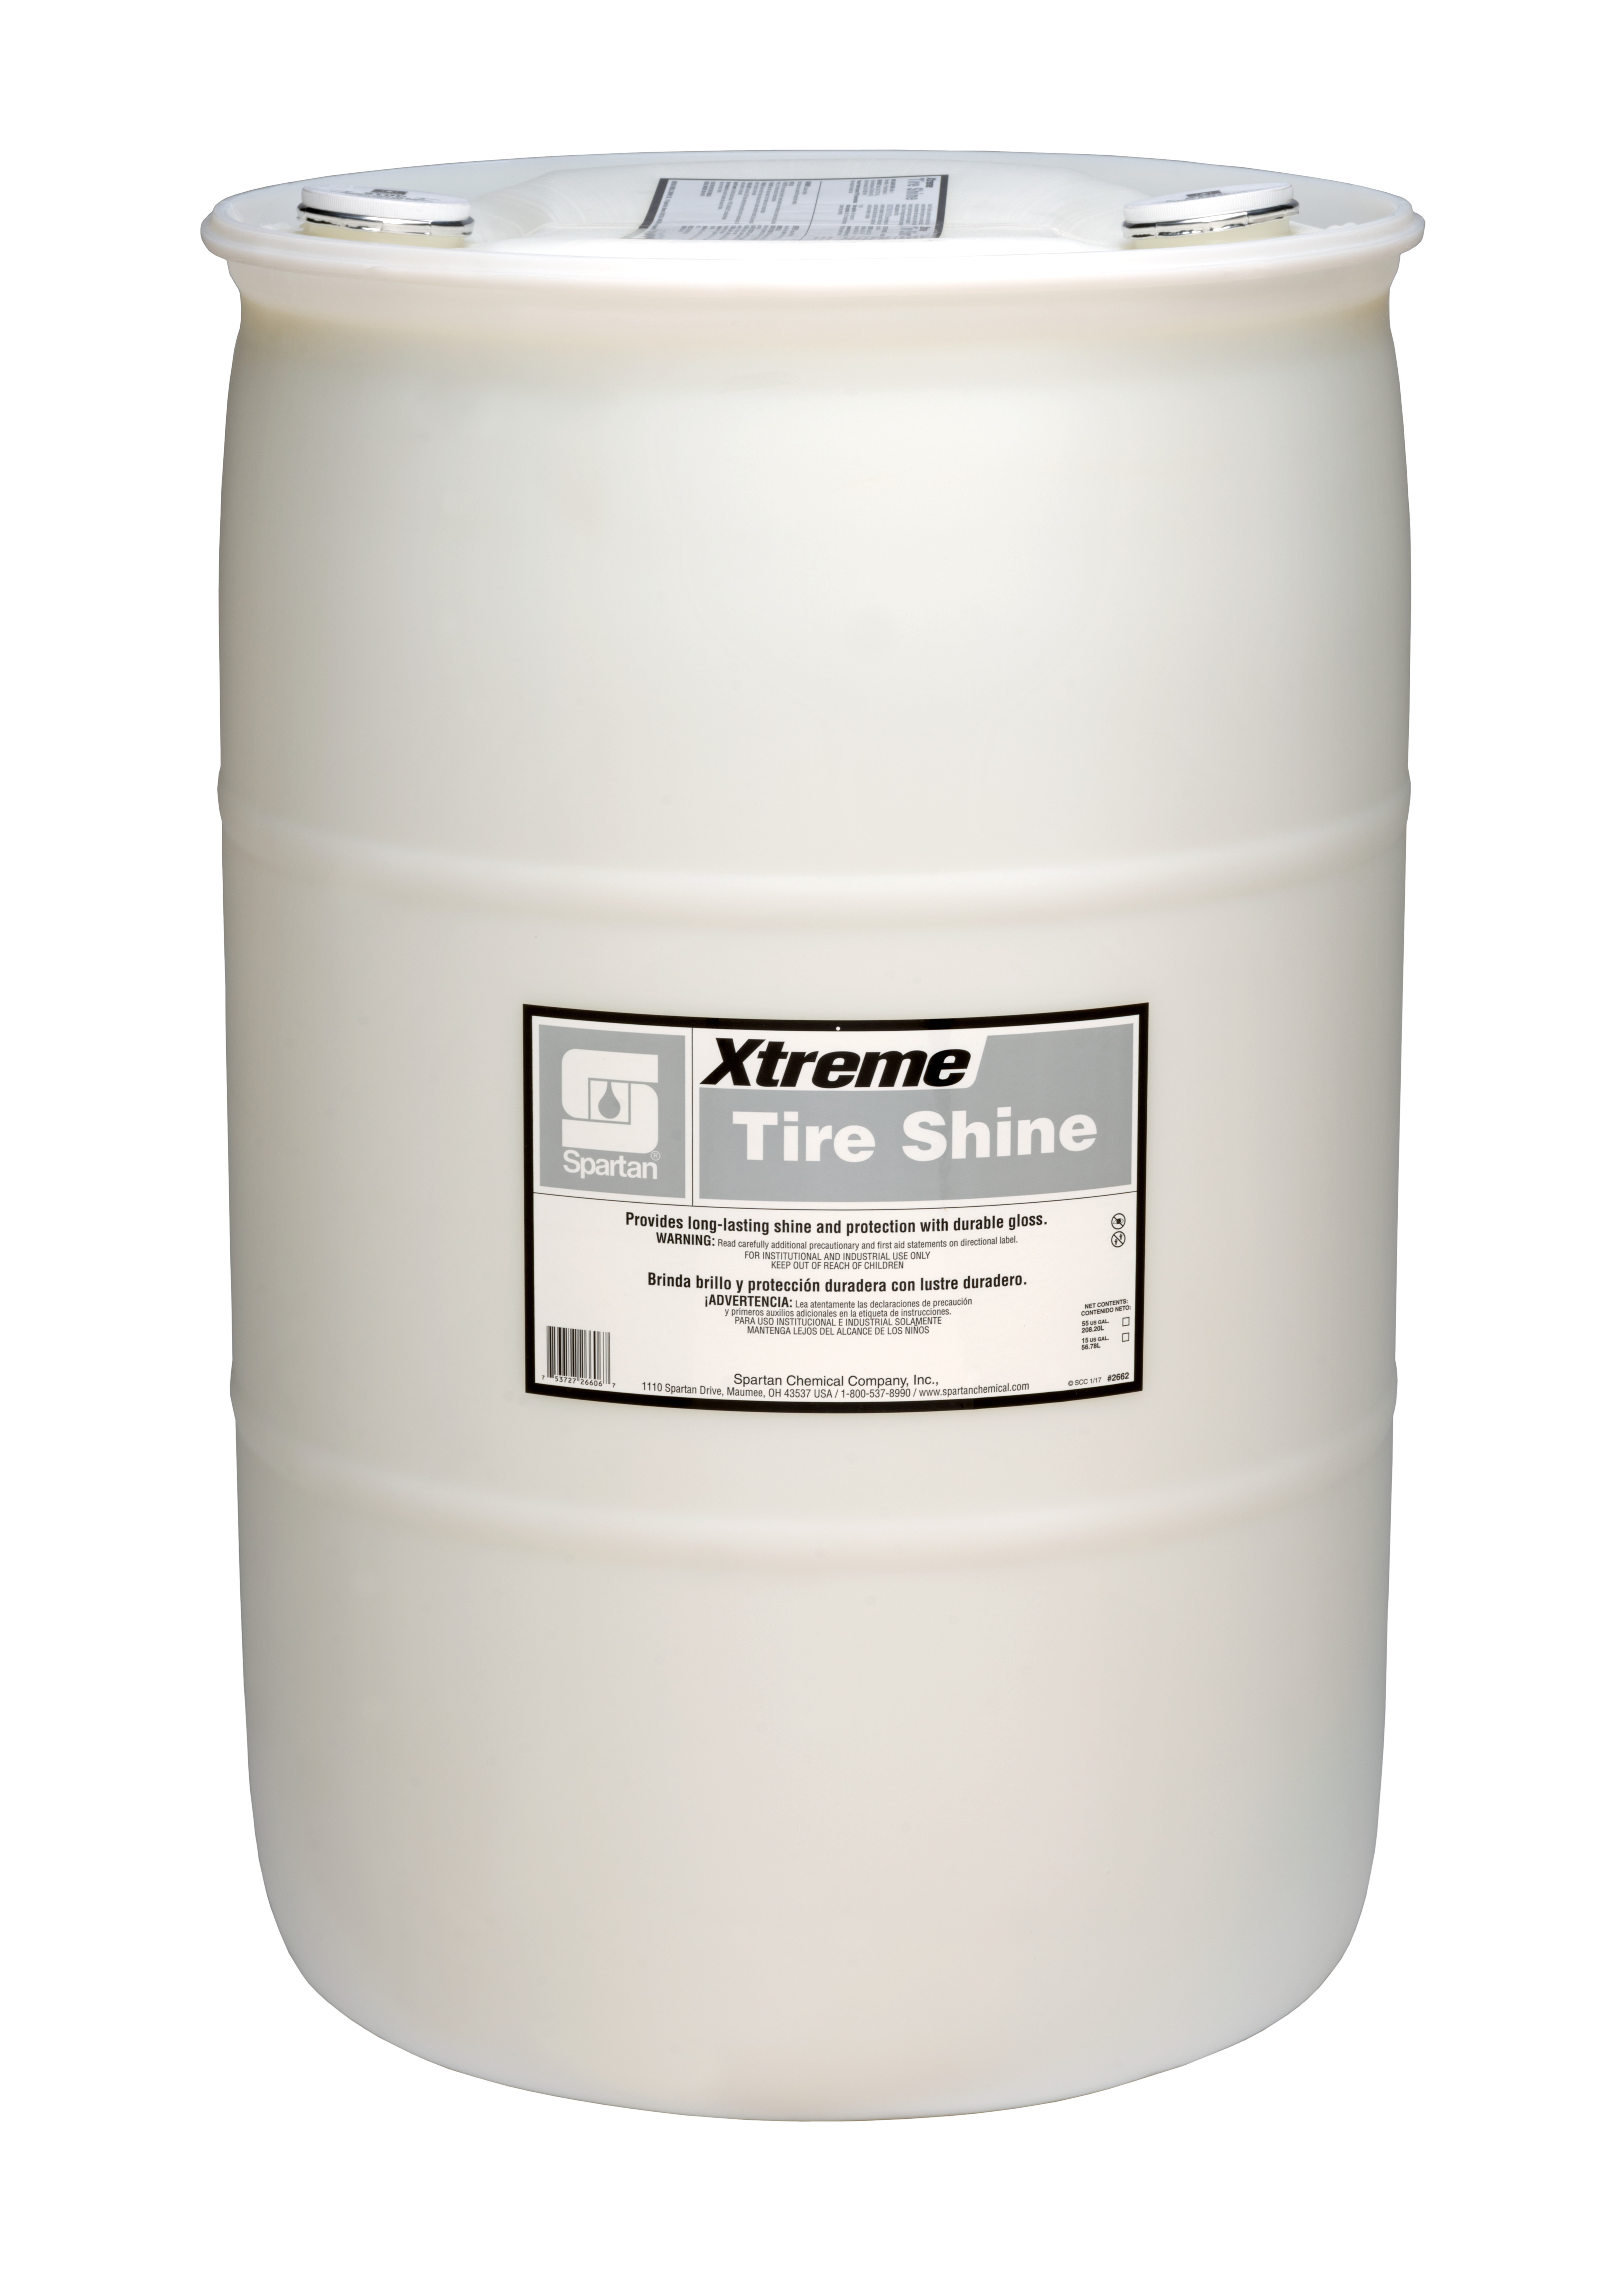 Xtreme+Tire+Shine+%7B55+gallon+drum%7D